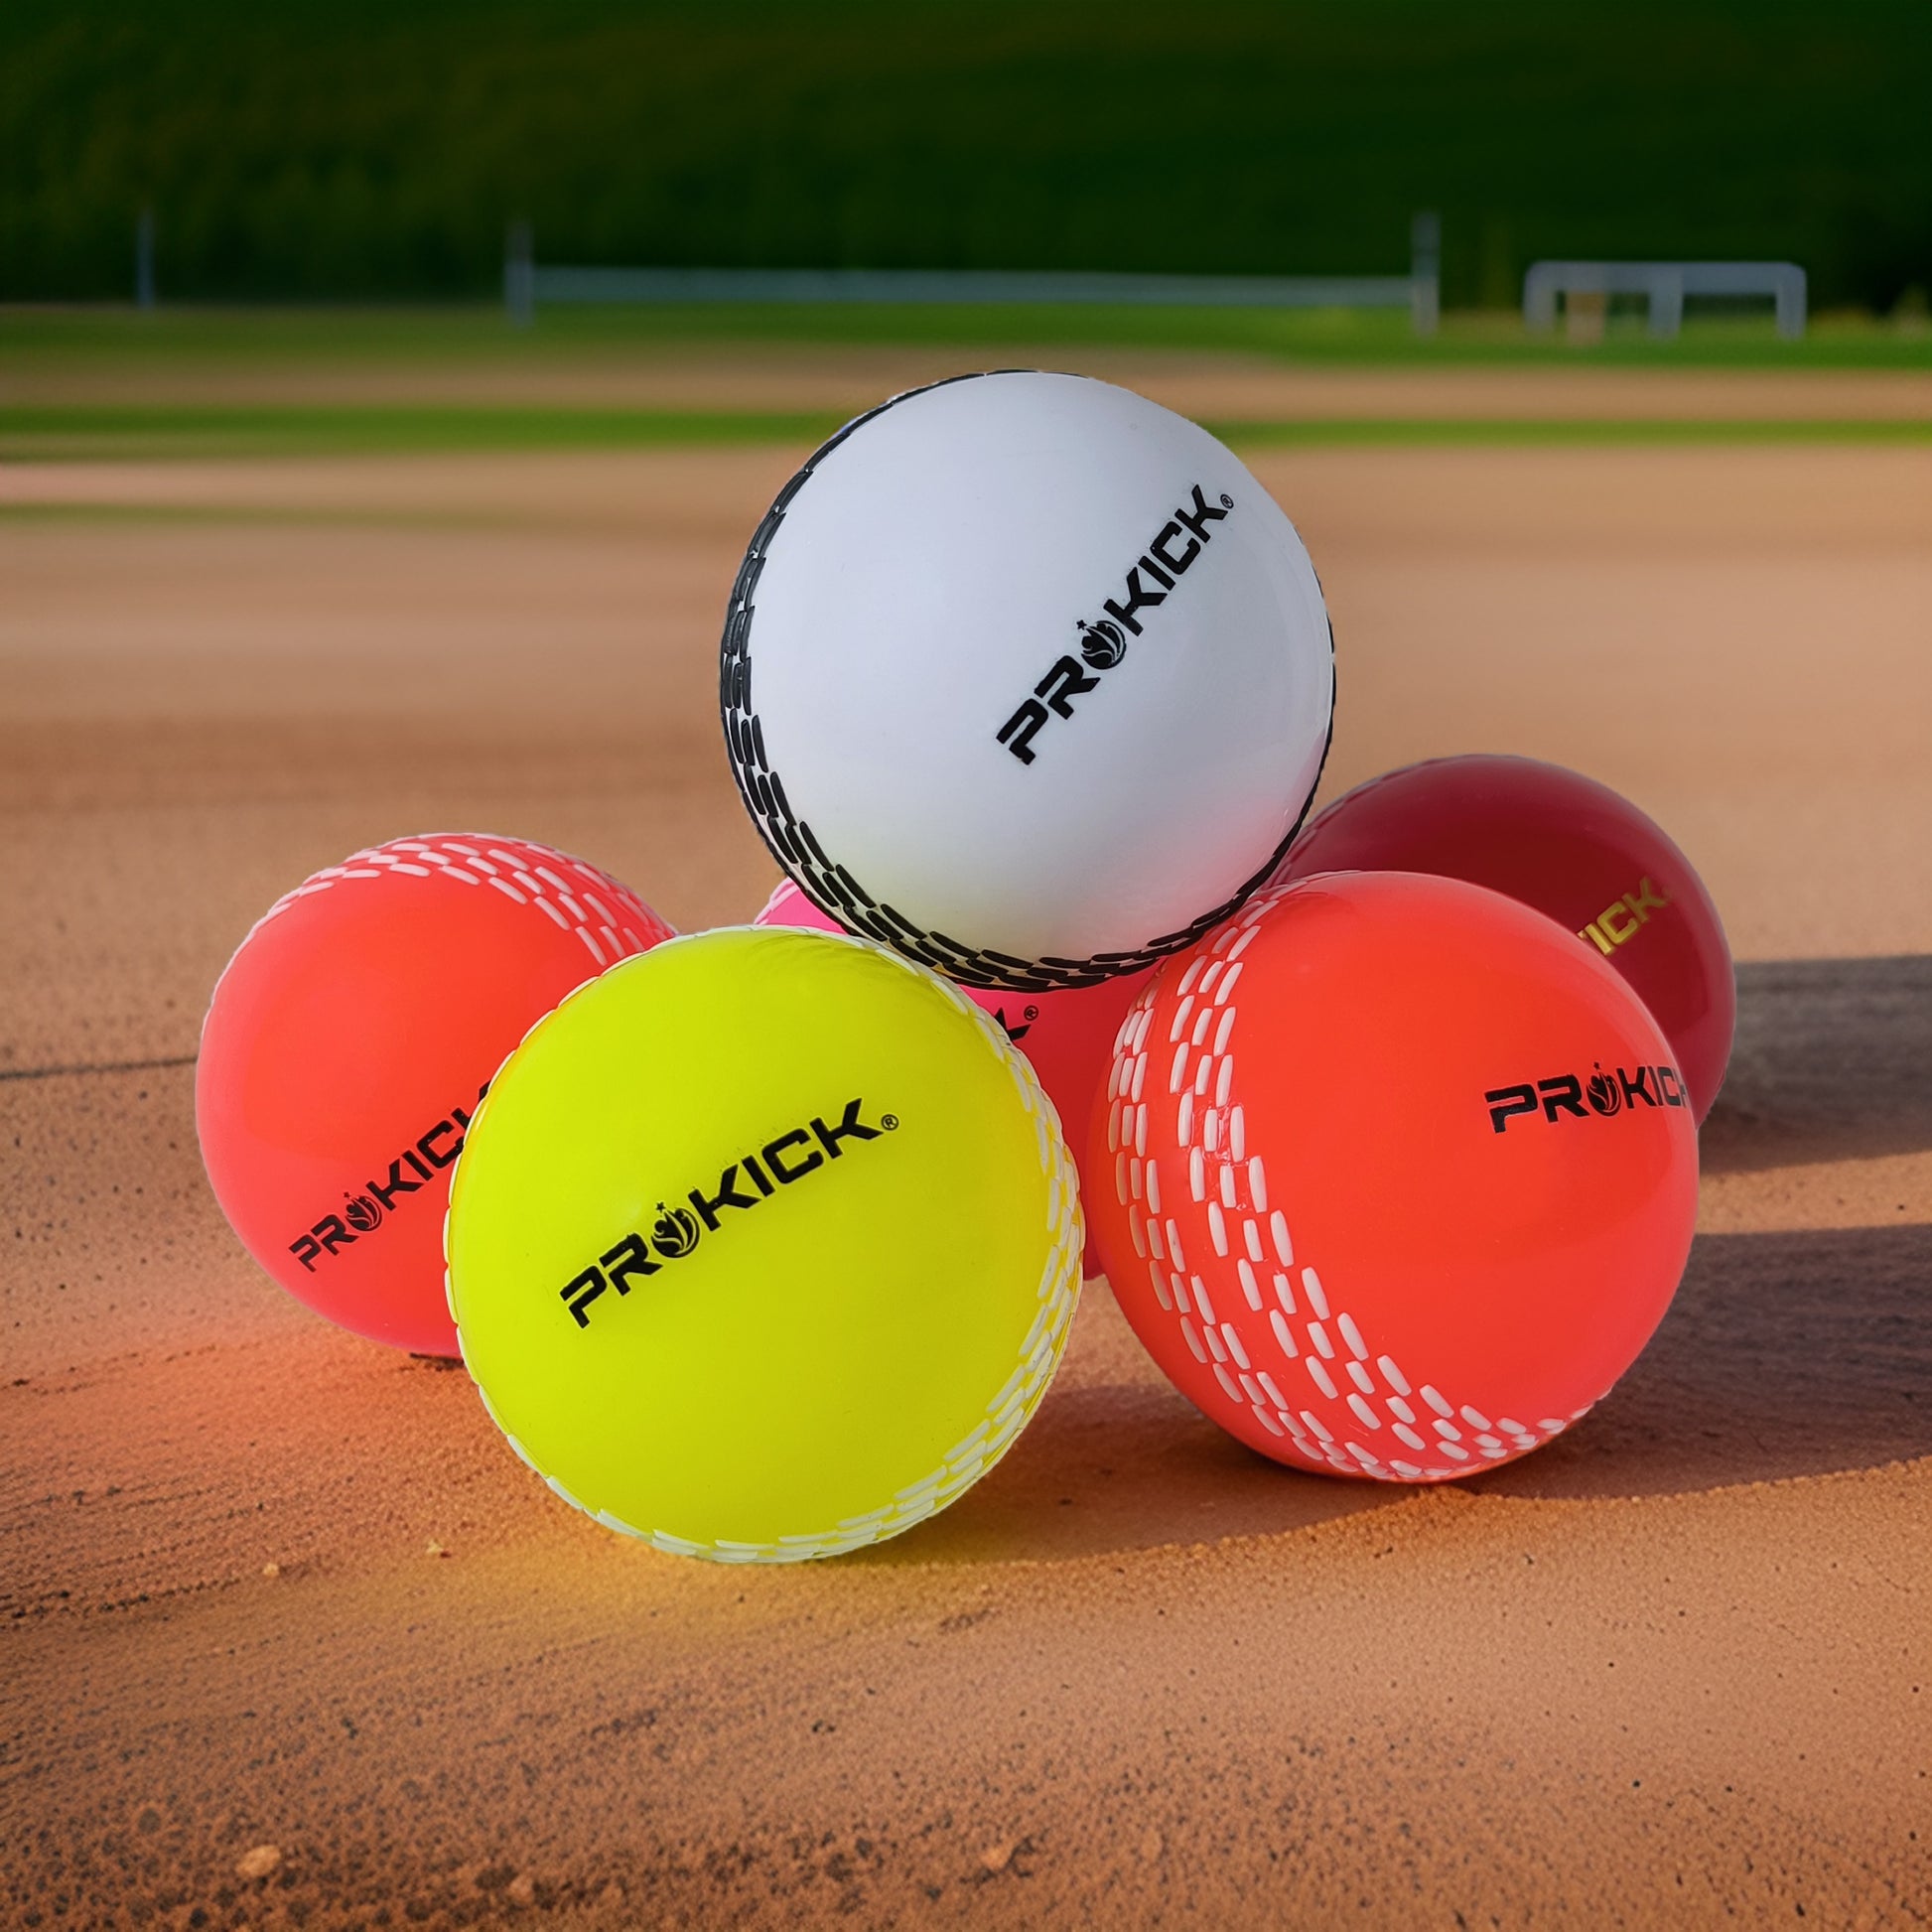 Prokick Seam Wind Balls (Pack Of 6 - Multicolor) - Best Price online Prokicksports.com